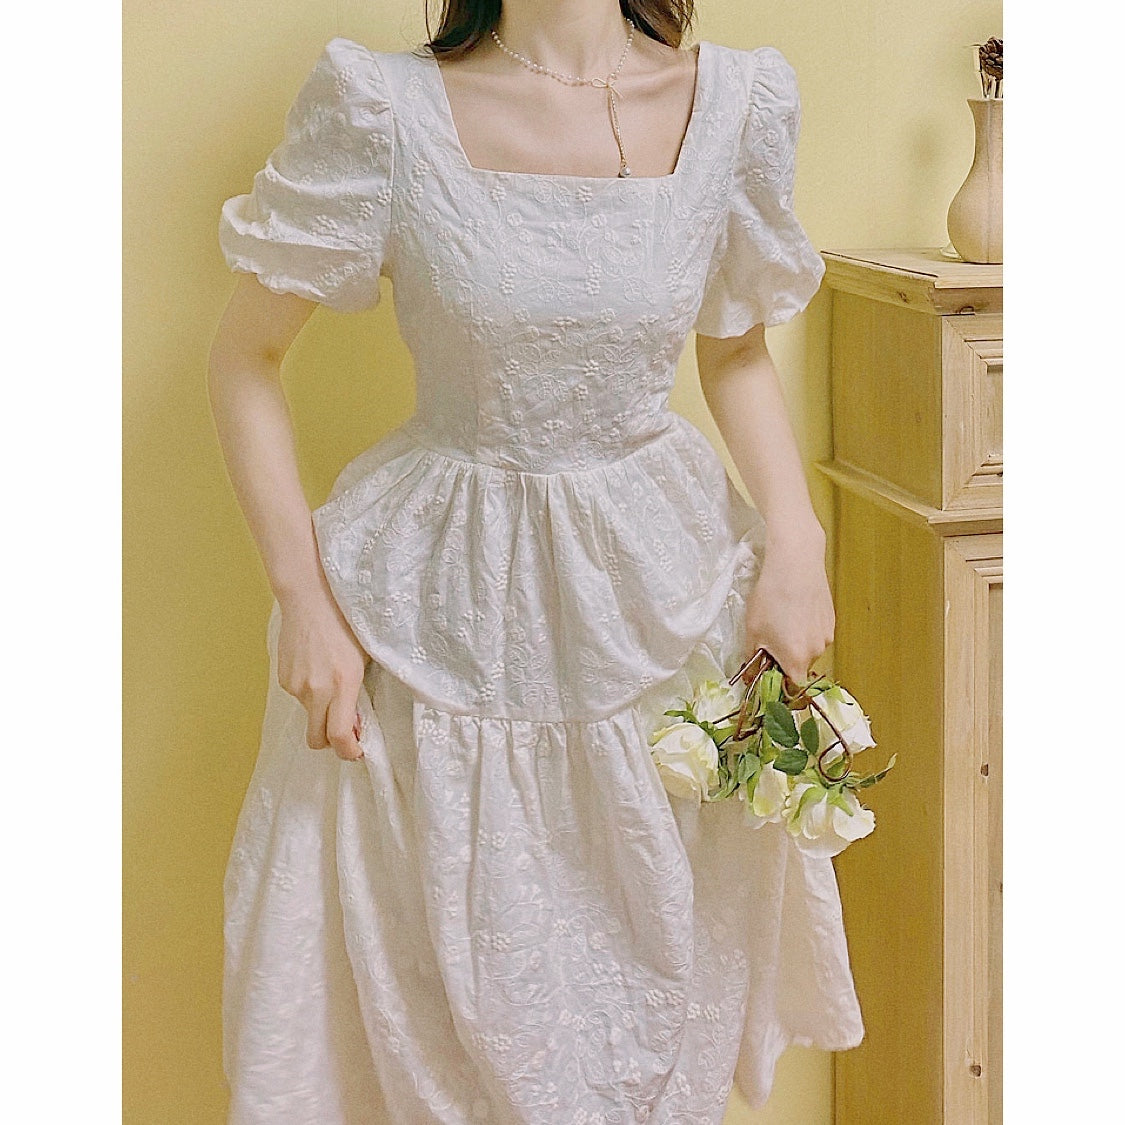 Cloudy White Flower cottagecore Dress | Cottagecore Dress